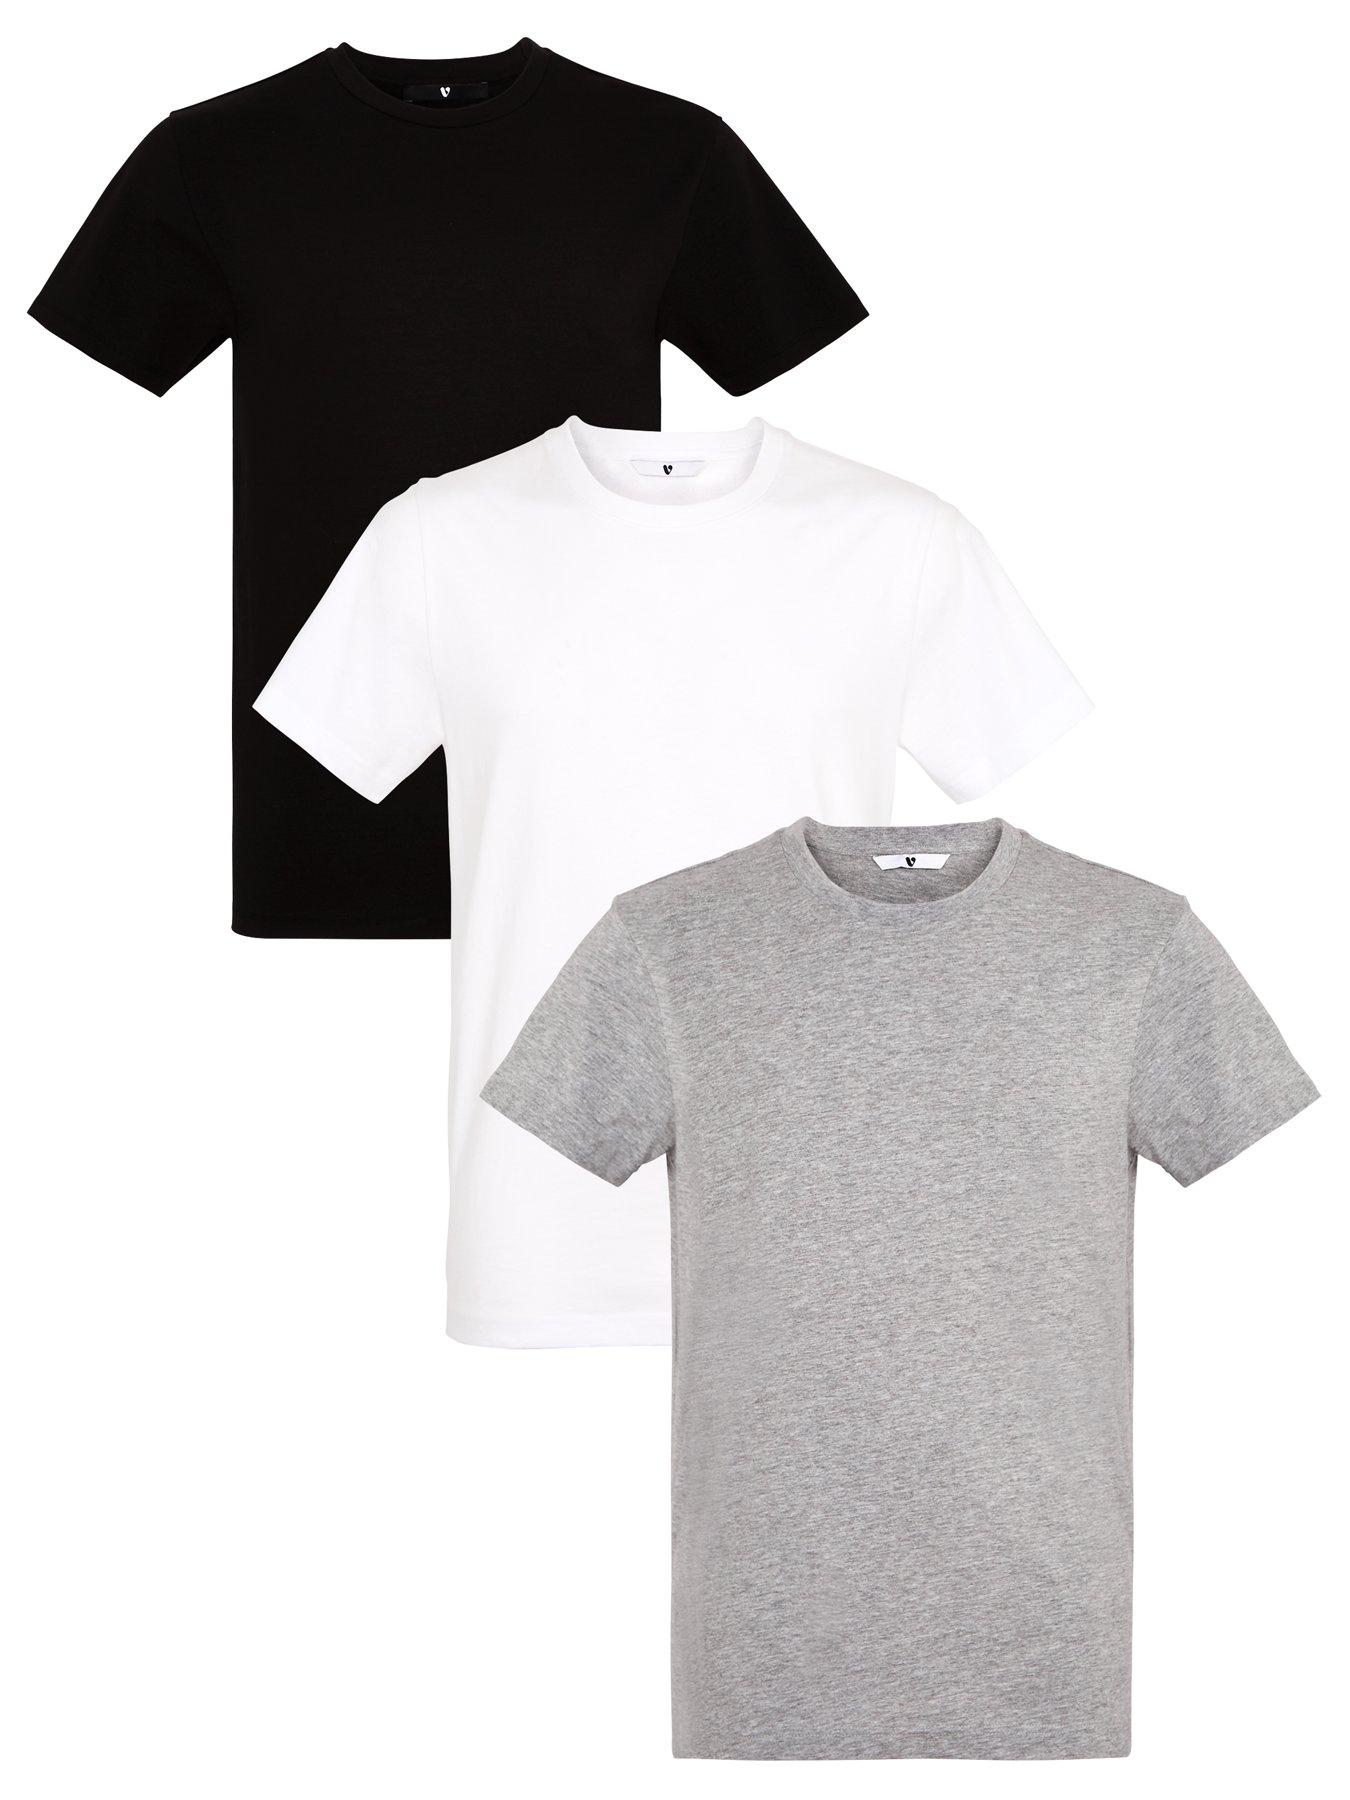 Men's T-Shirt Packs & Multipack T-Shirts